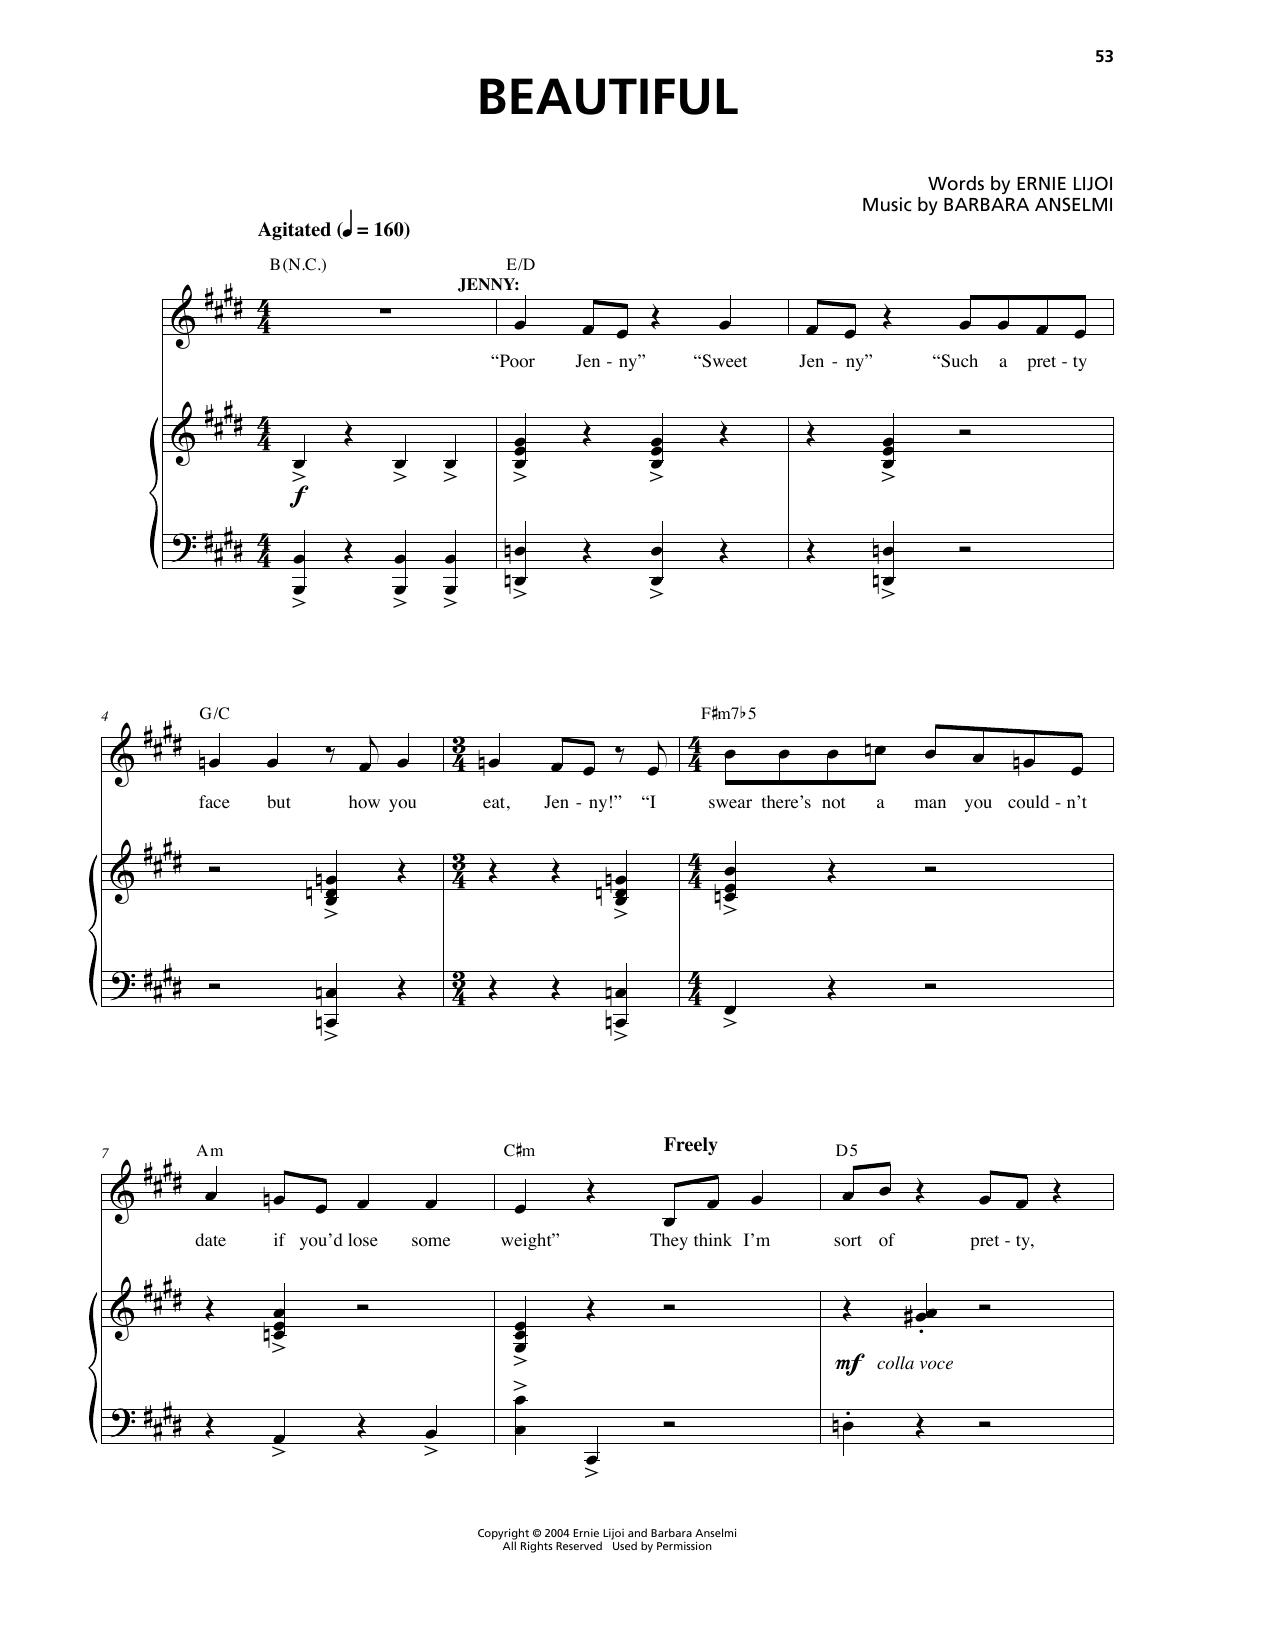 Barbara Anselmi & Ernie Lijoi Beautiful Sheet Music Notes & Chords for Piano & Vocal - Download or Print PDF